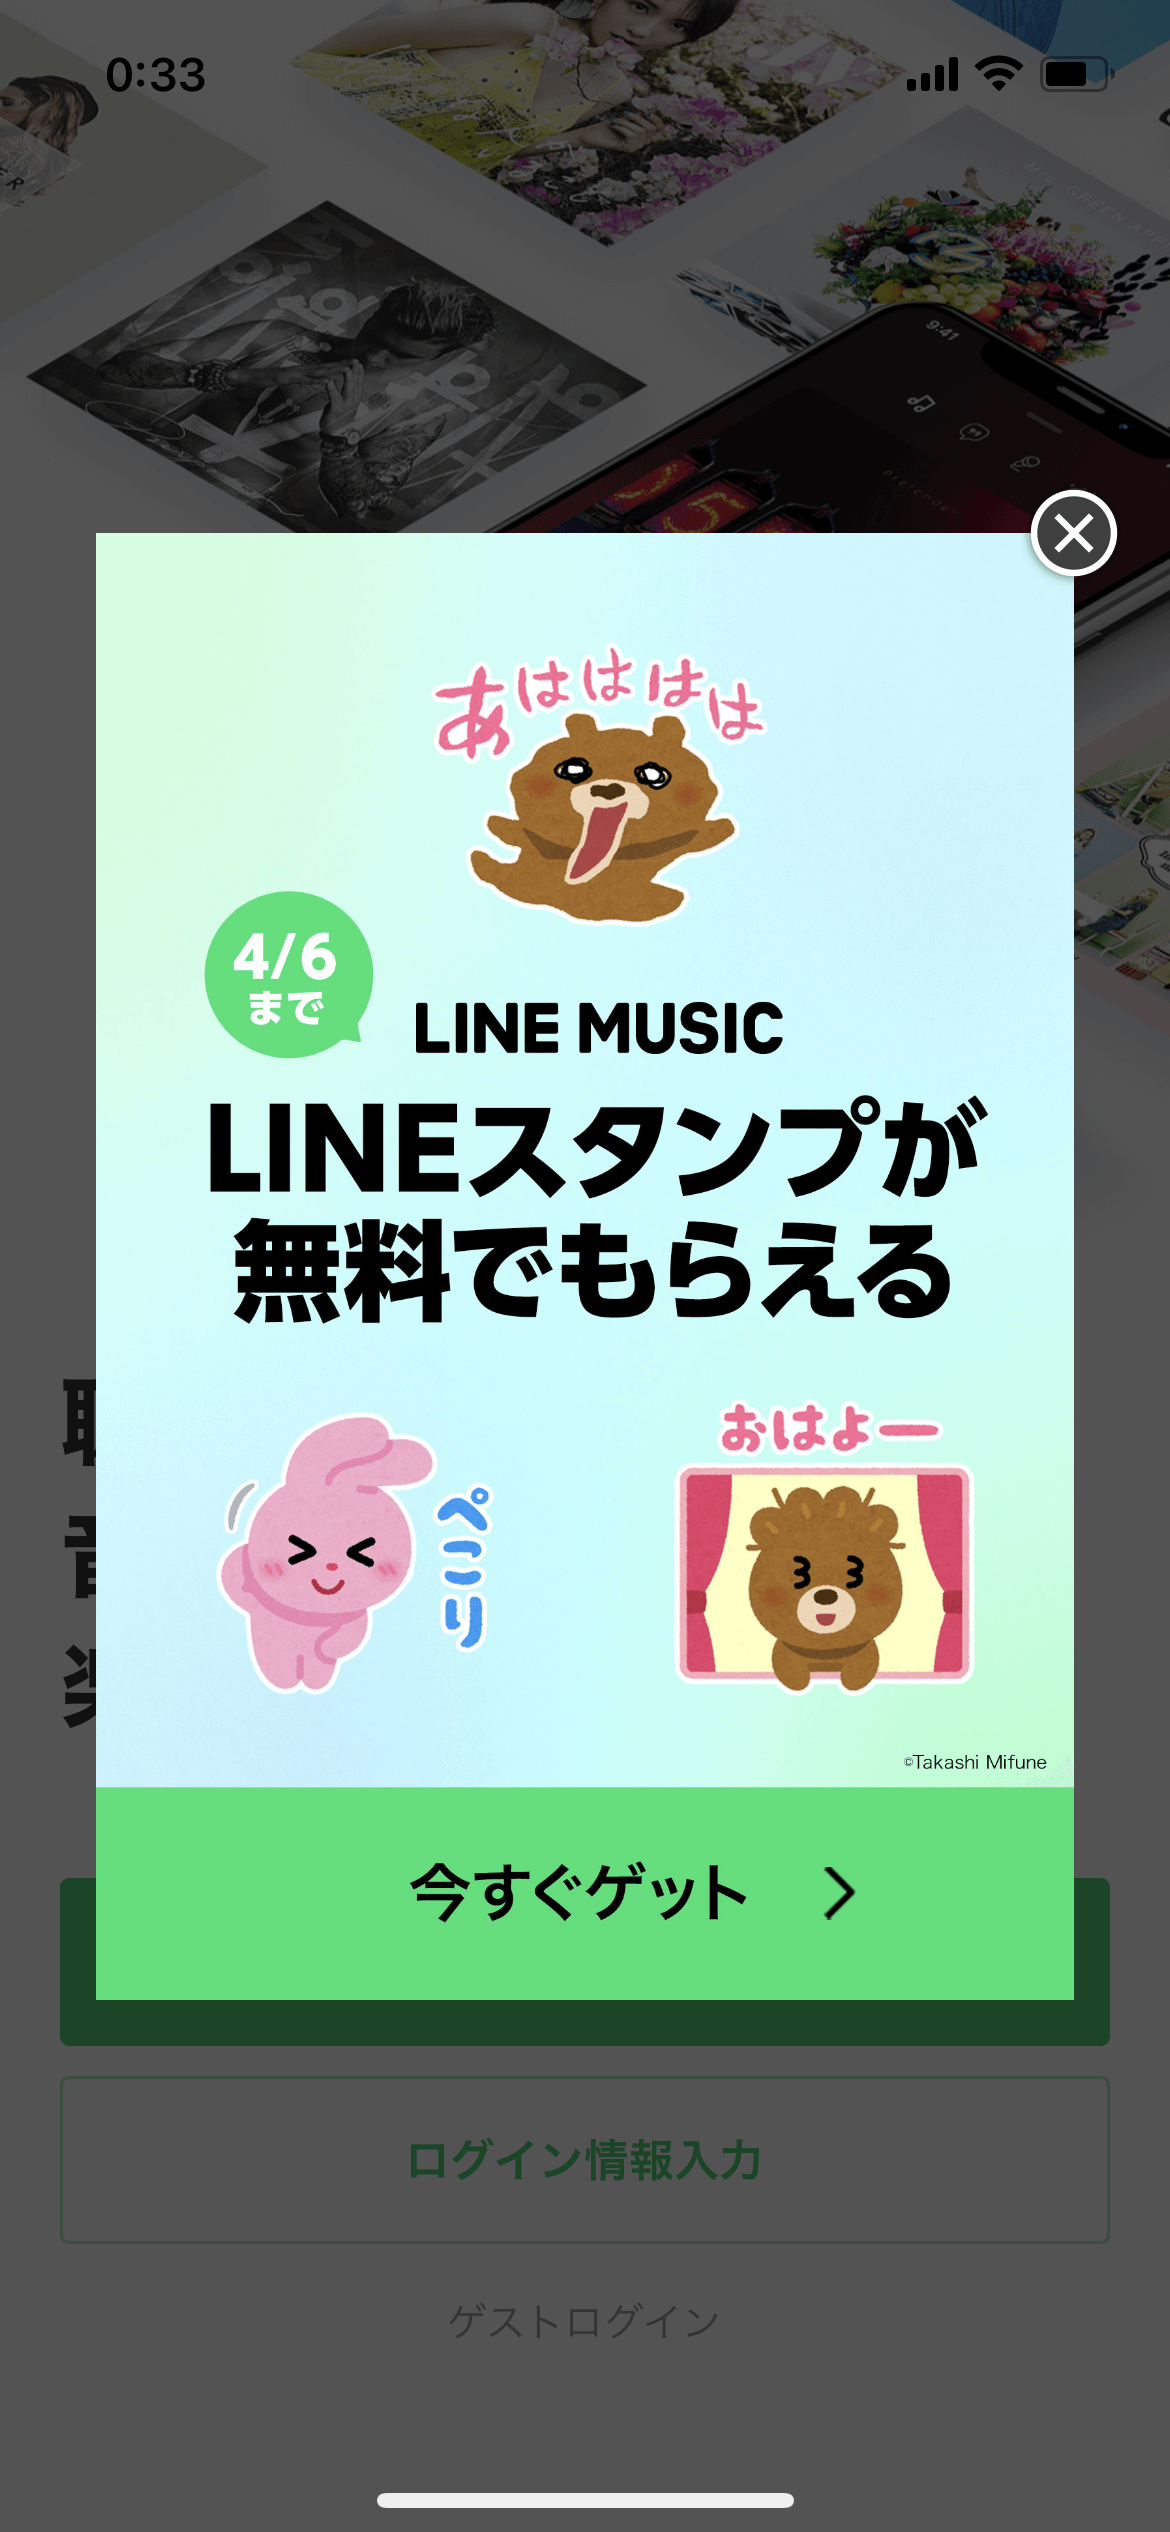 LINE MUSIC オンボーディング screen